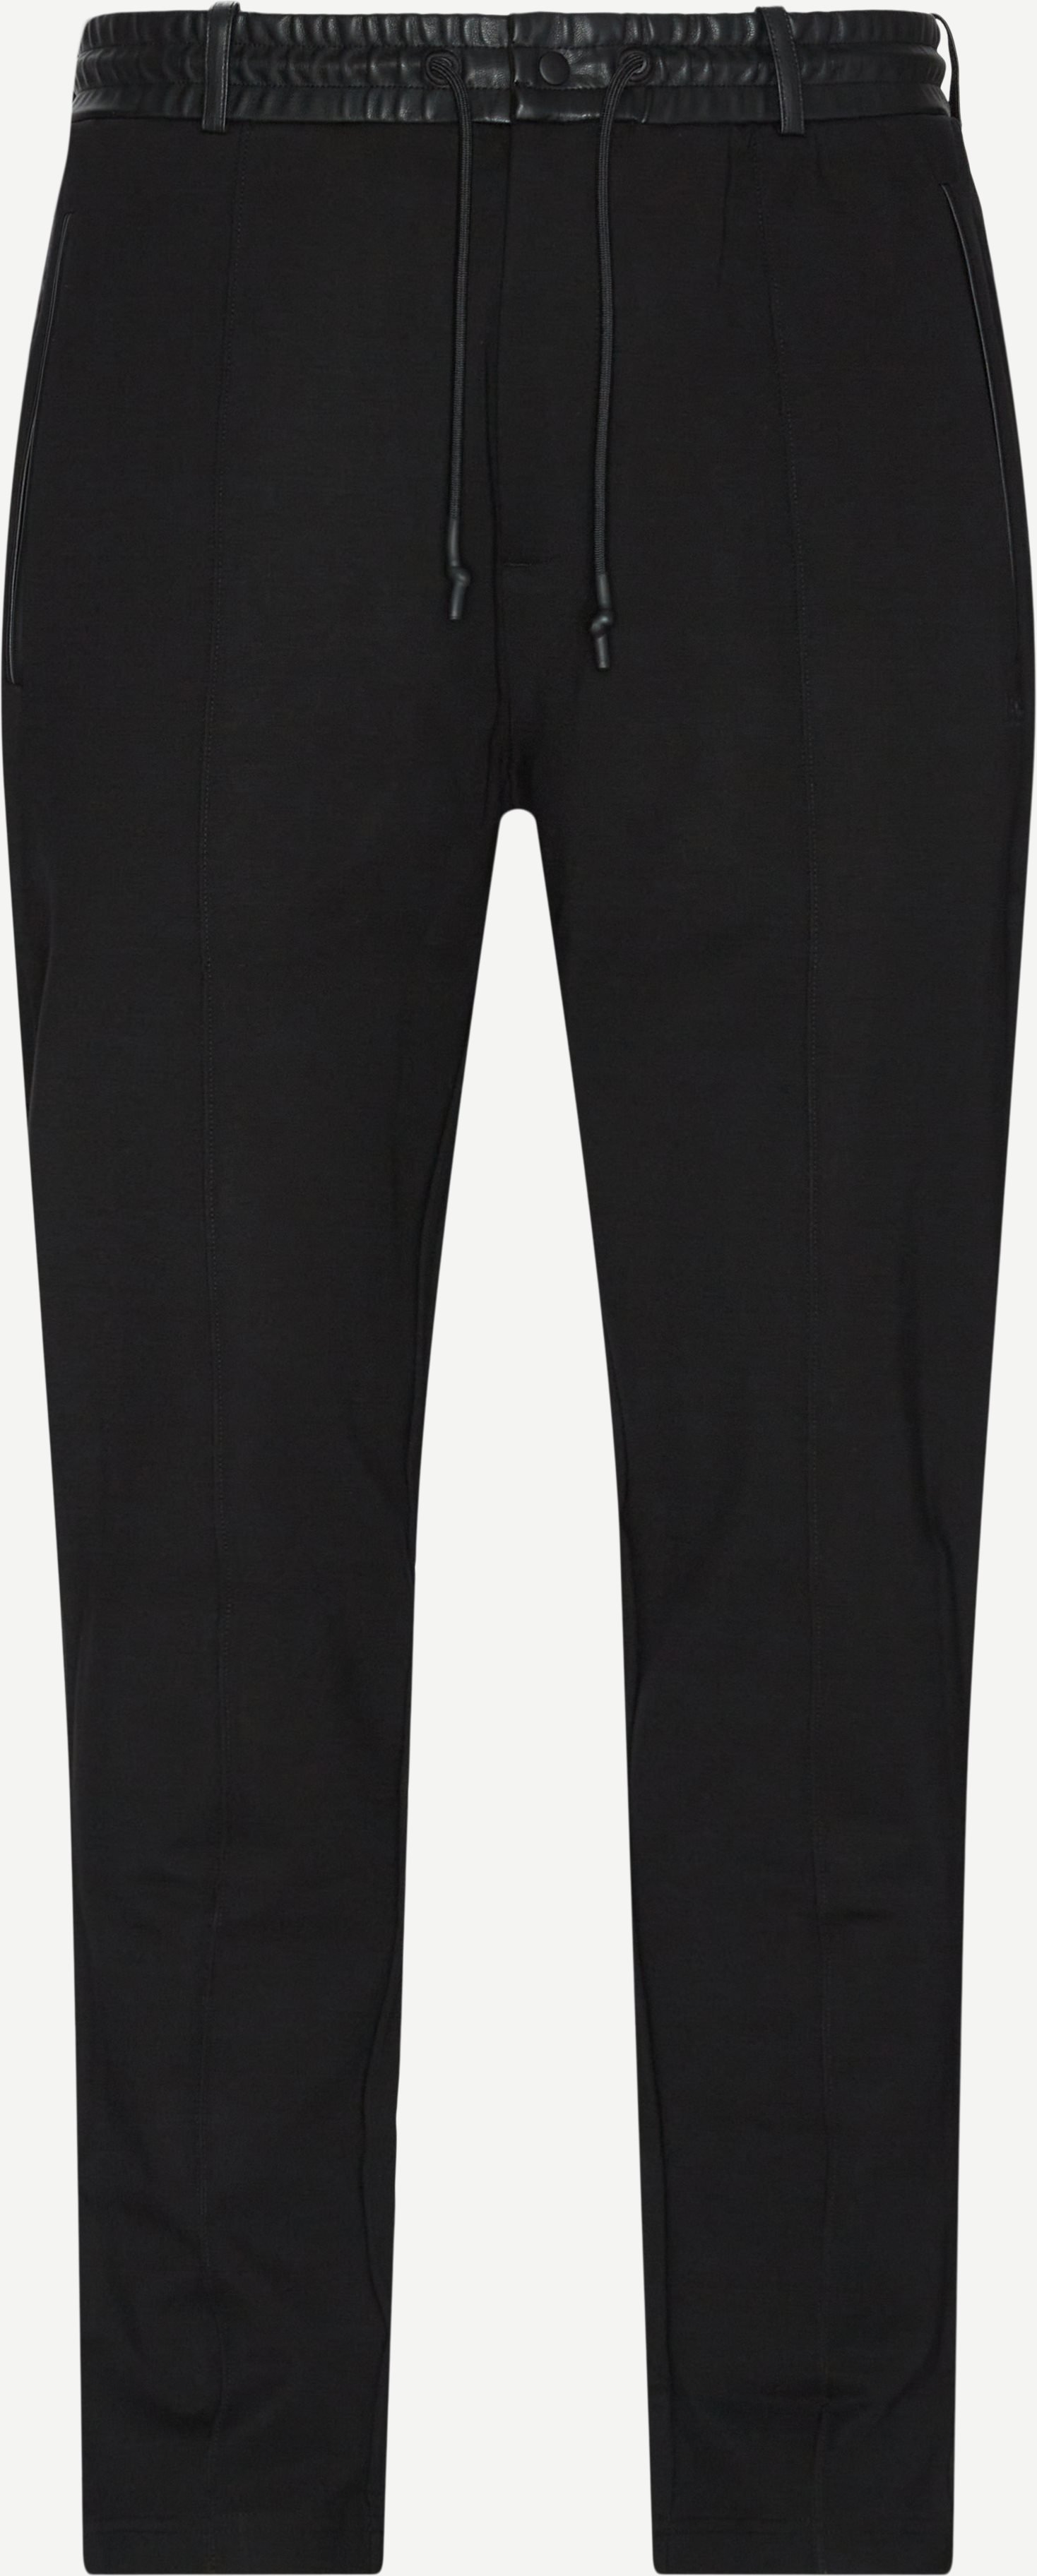 Helux Sweatpants - Trousers - Regular fit - Black